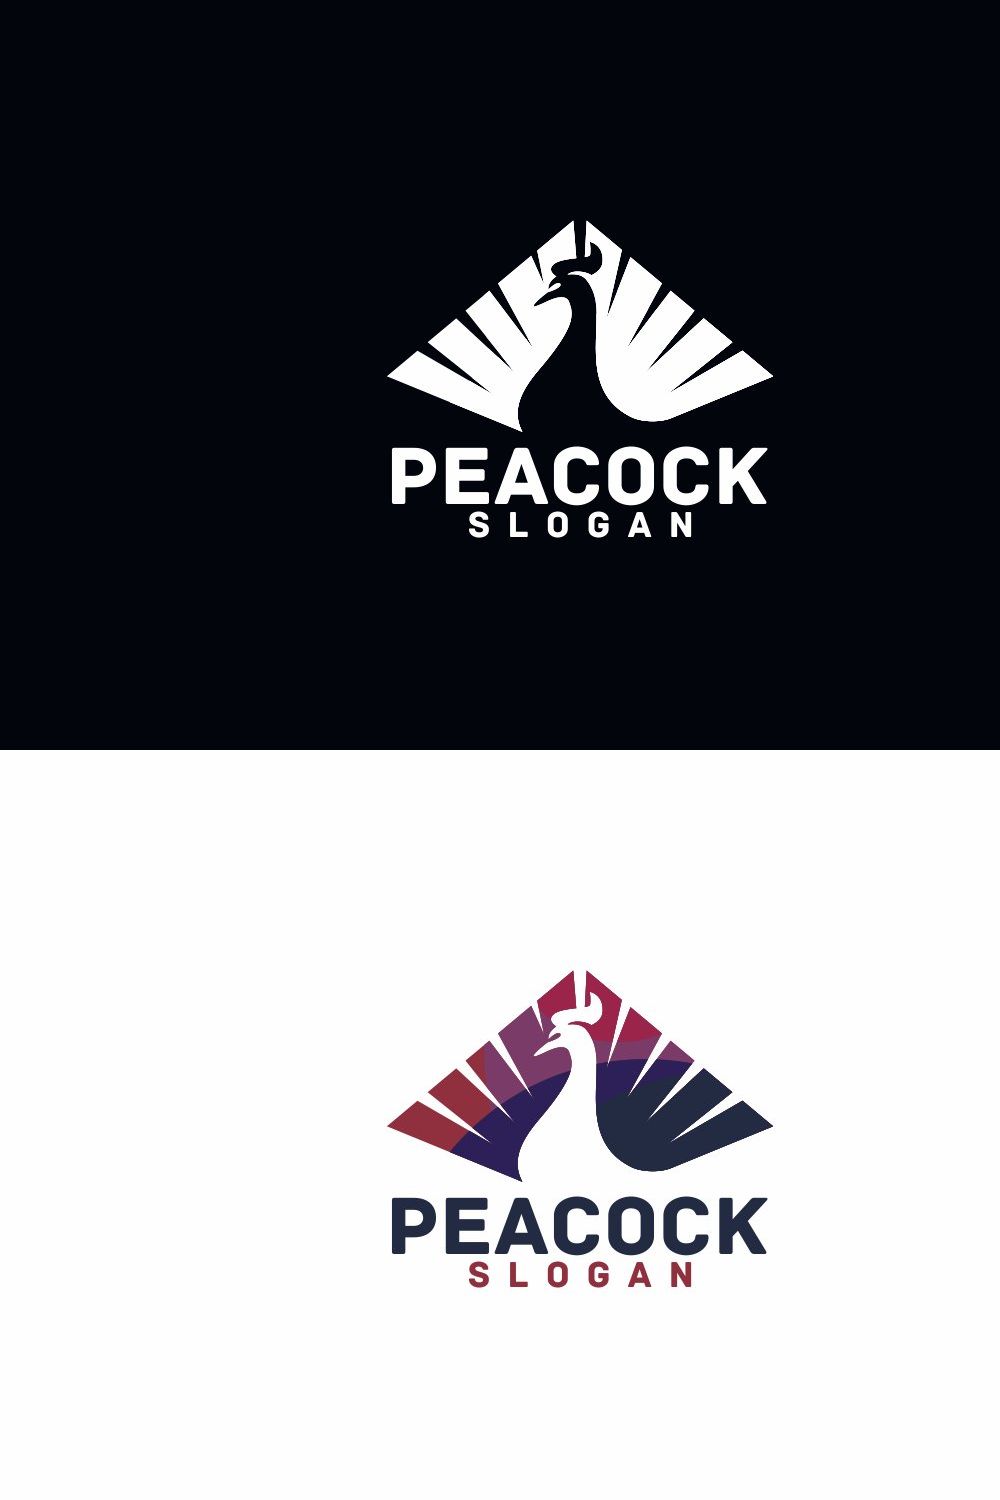 Peacock Logo pinterest preview image.